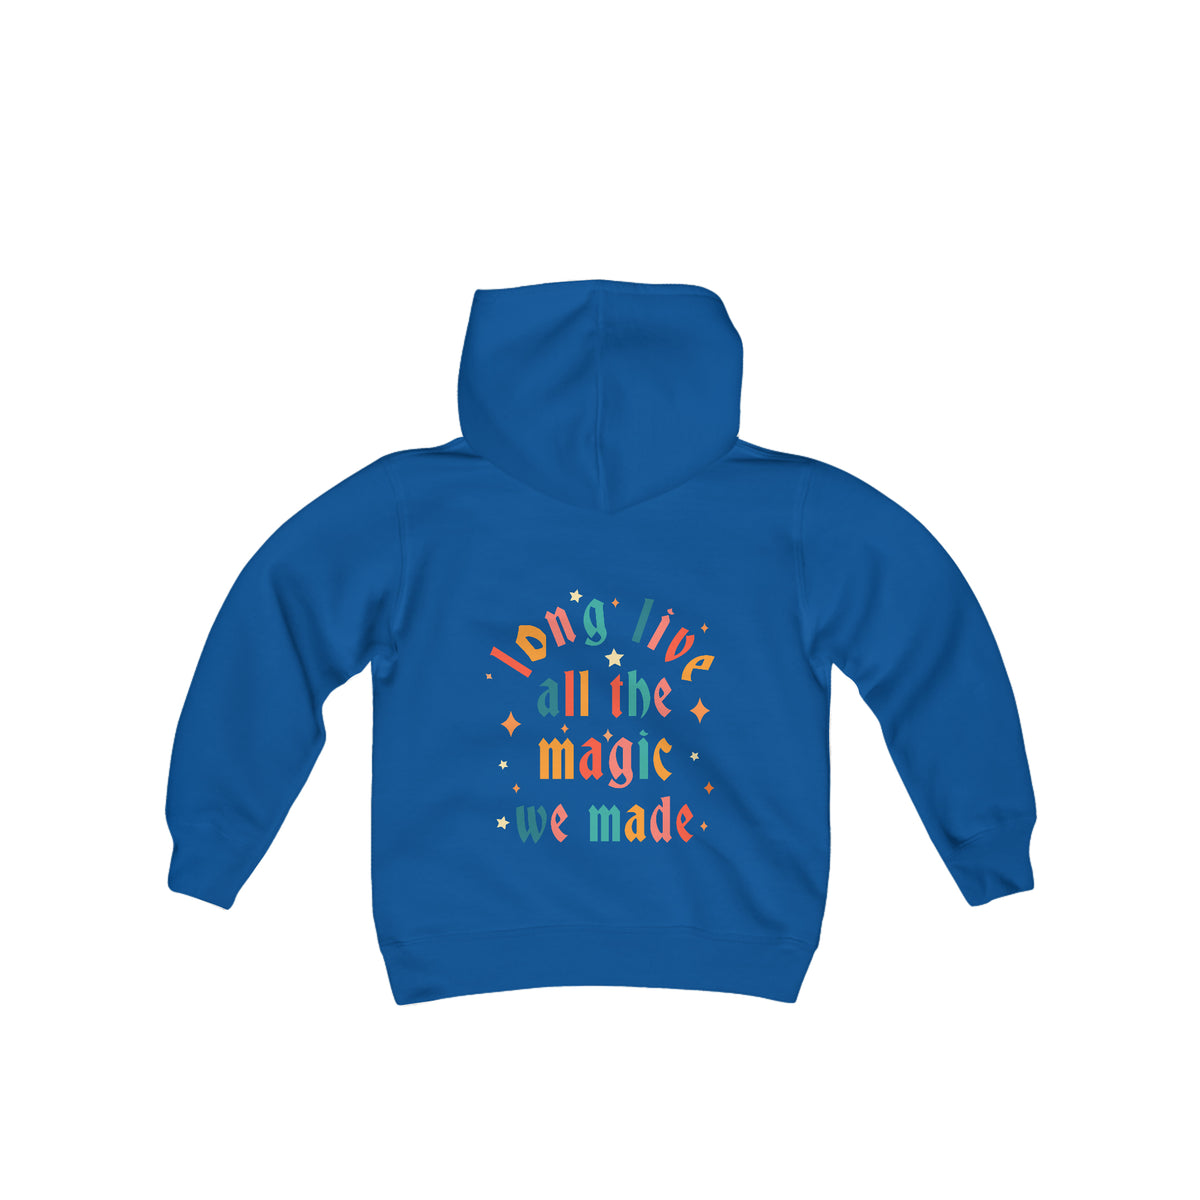 Long Live All The Magic We Made Gildan Youth Heavy Blend Hooded Sweatshirt